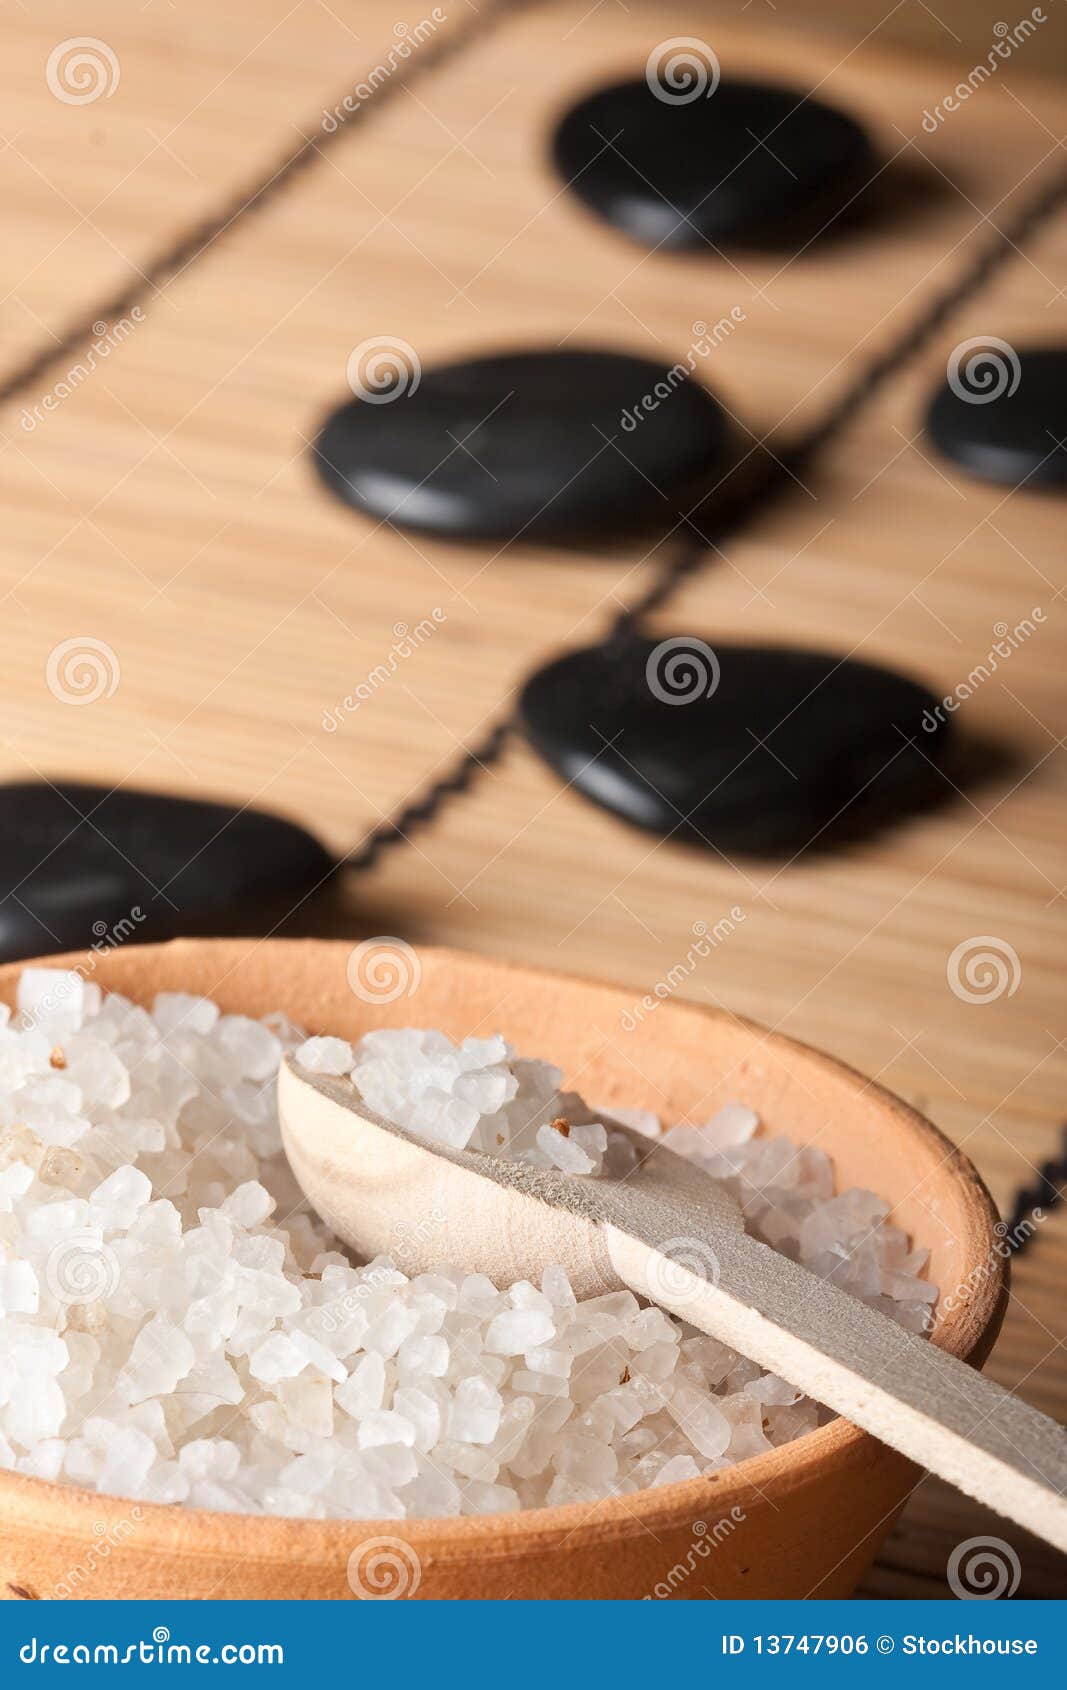 aromatic salt in stone bowl